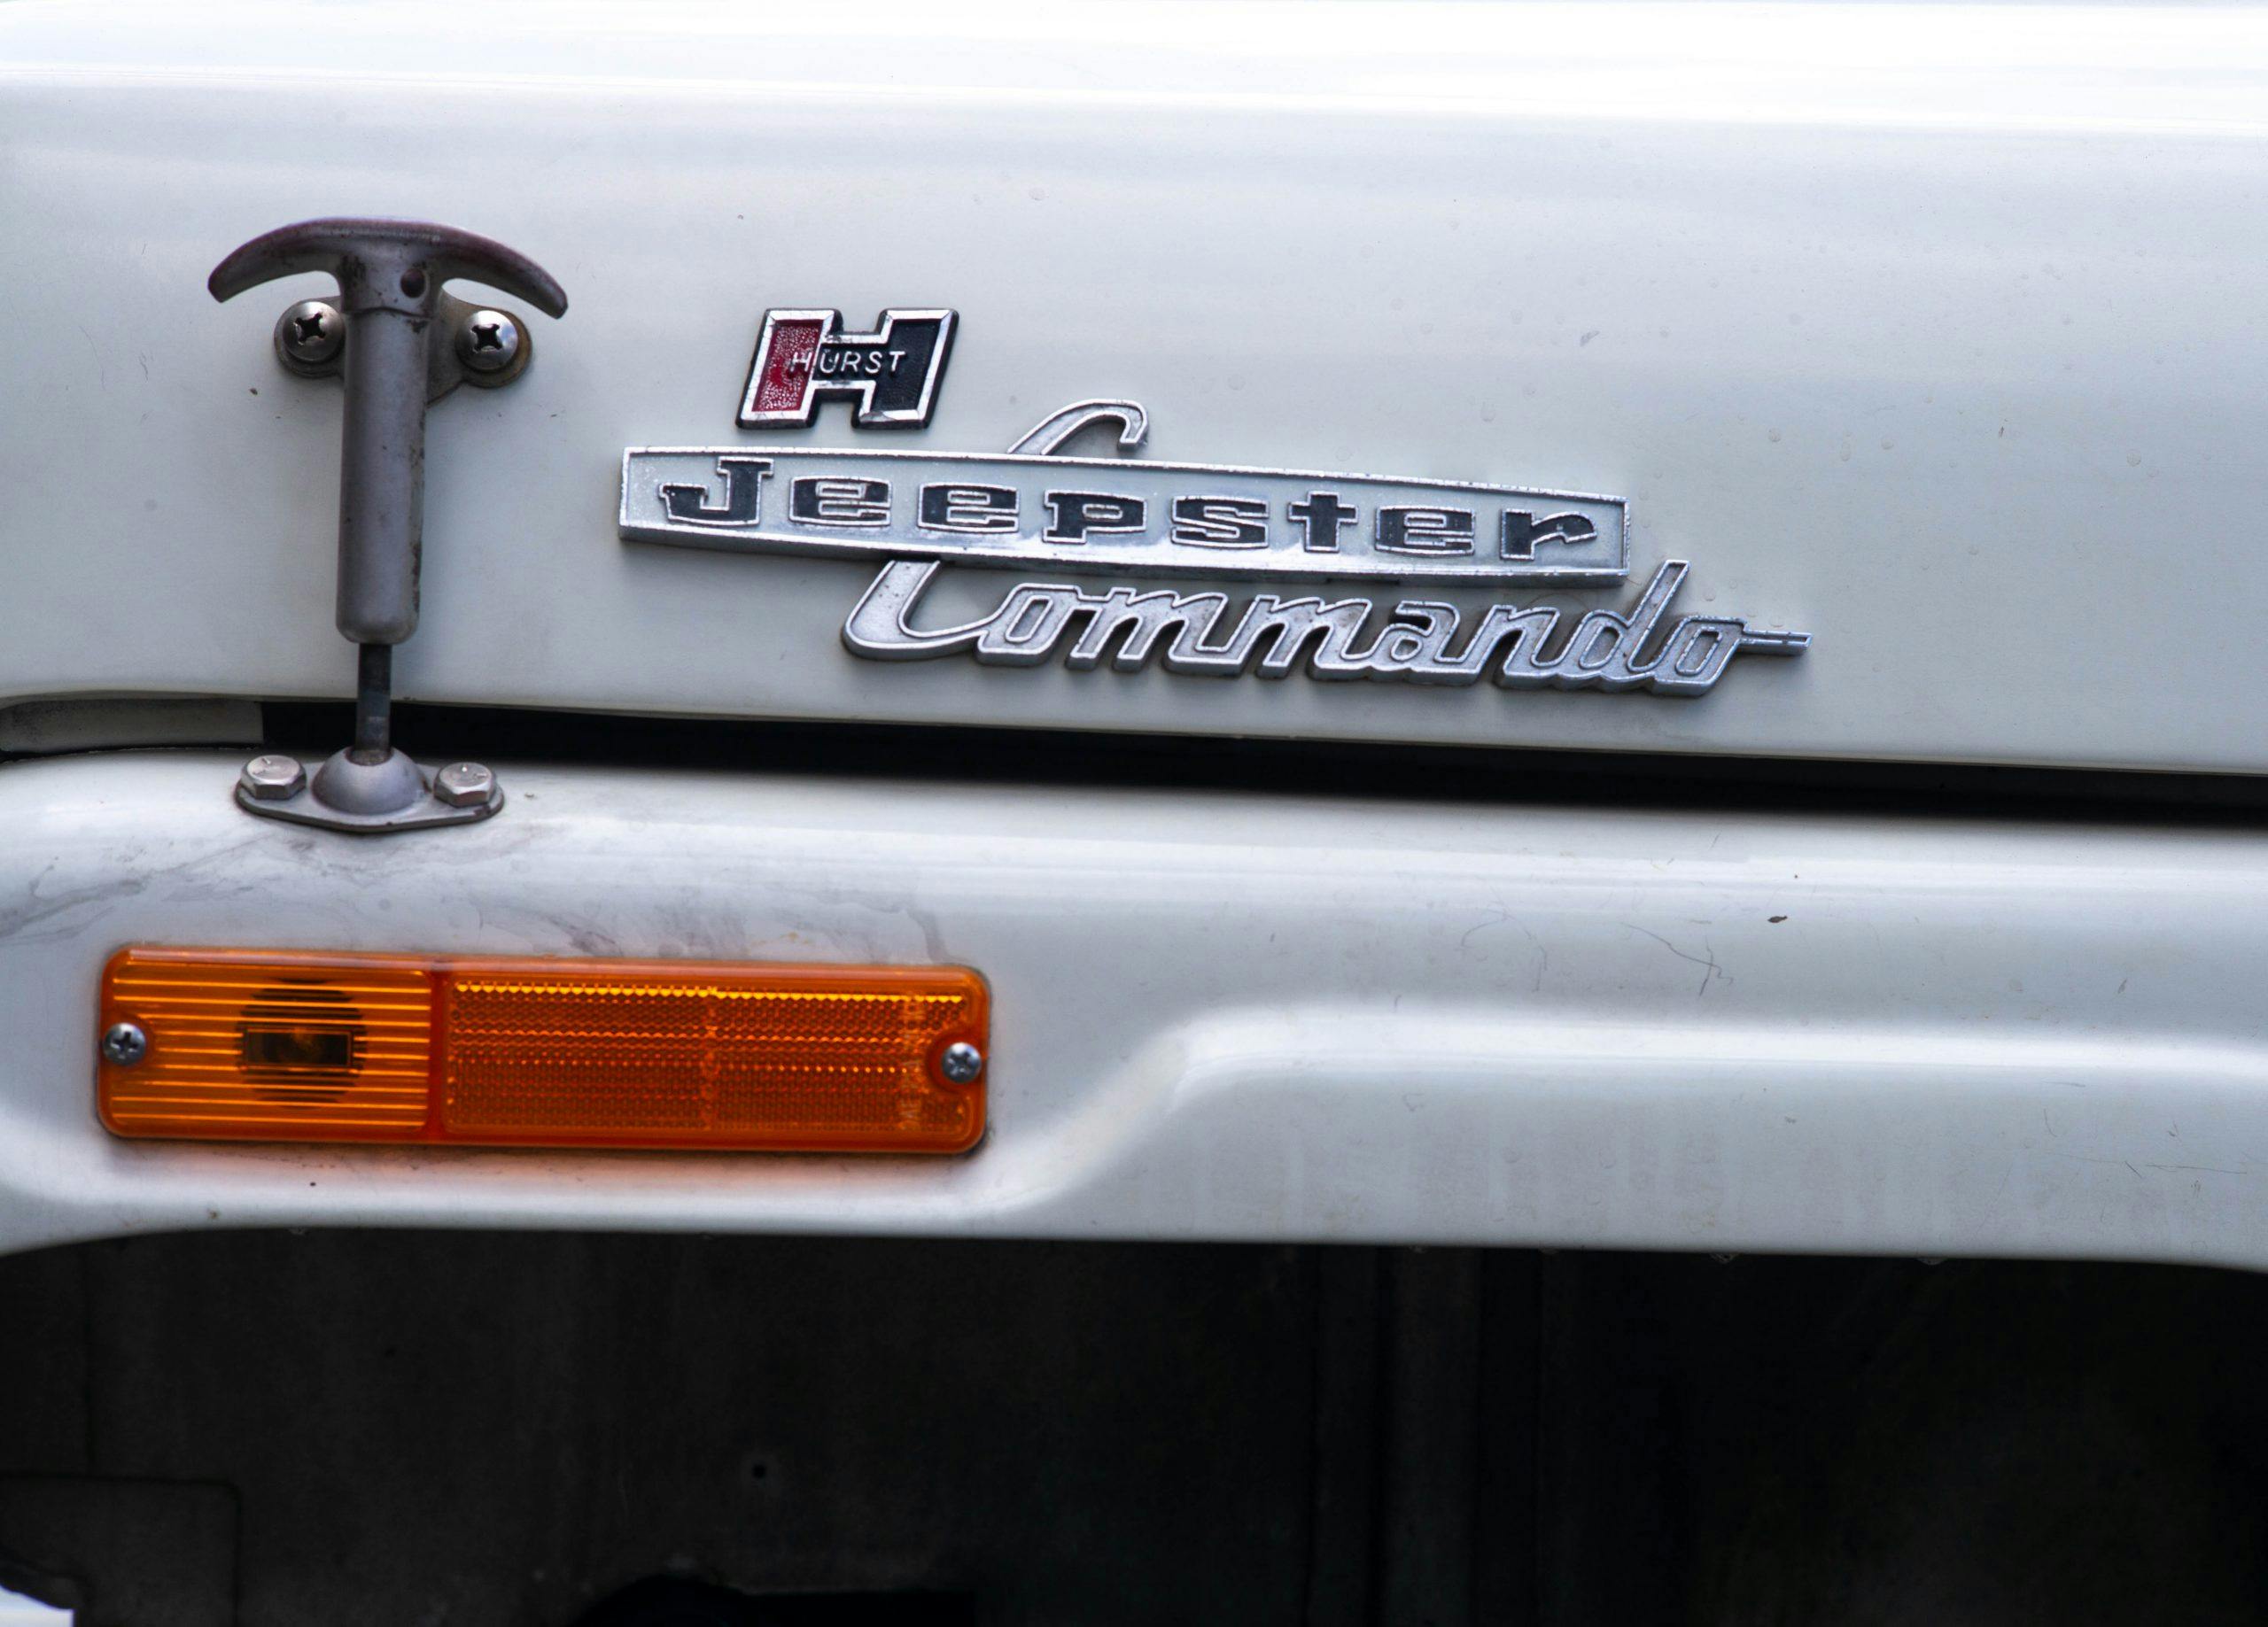 1971 Jeepster Commando badges